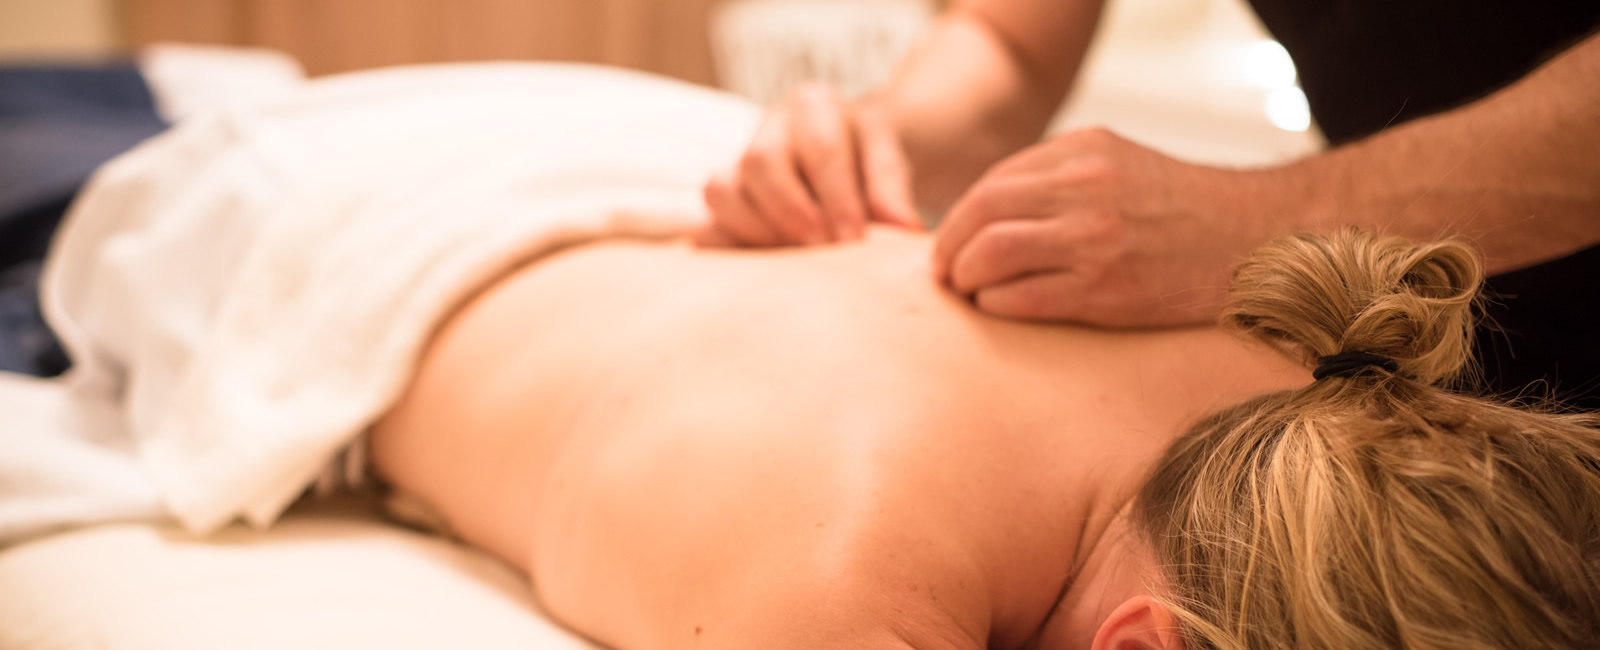 Massothérapie Vitalie - Massage Therapist in Ahuntsic Montreal